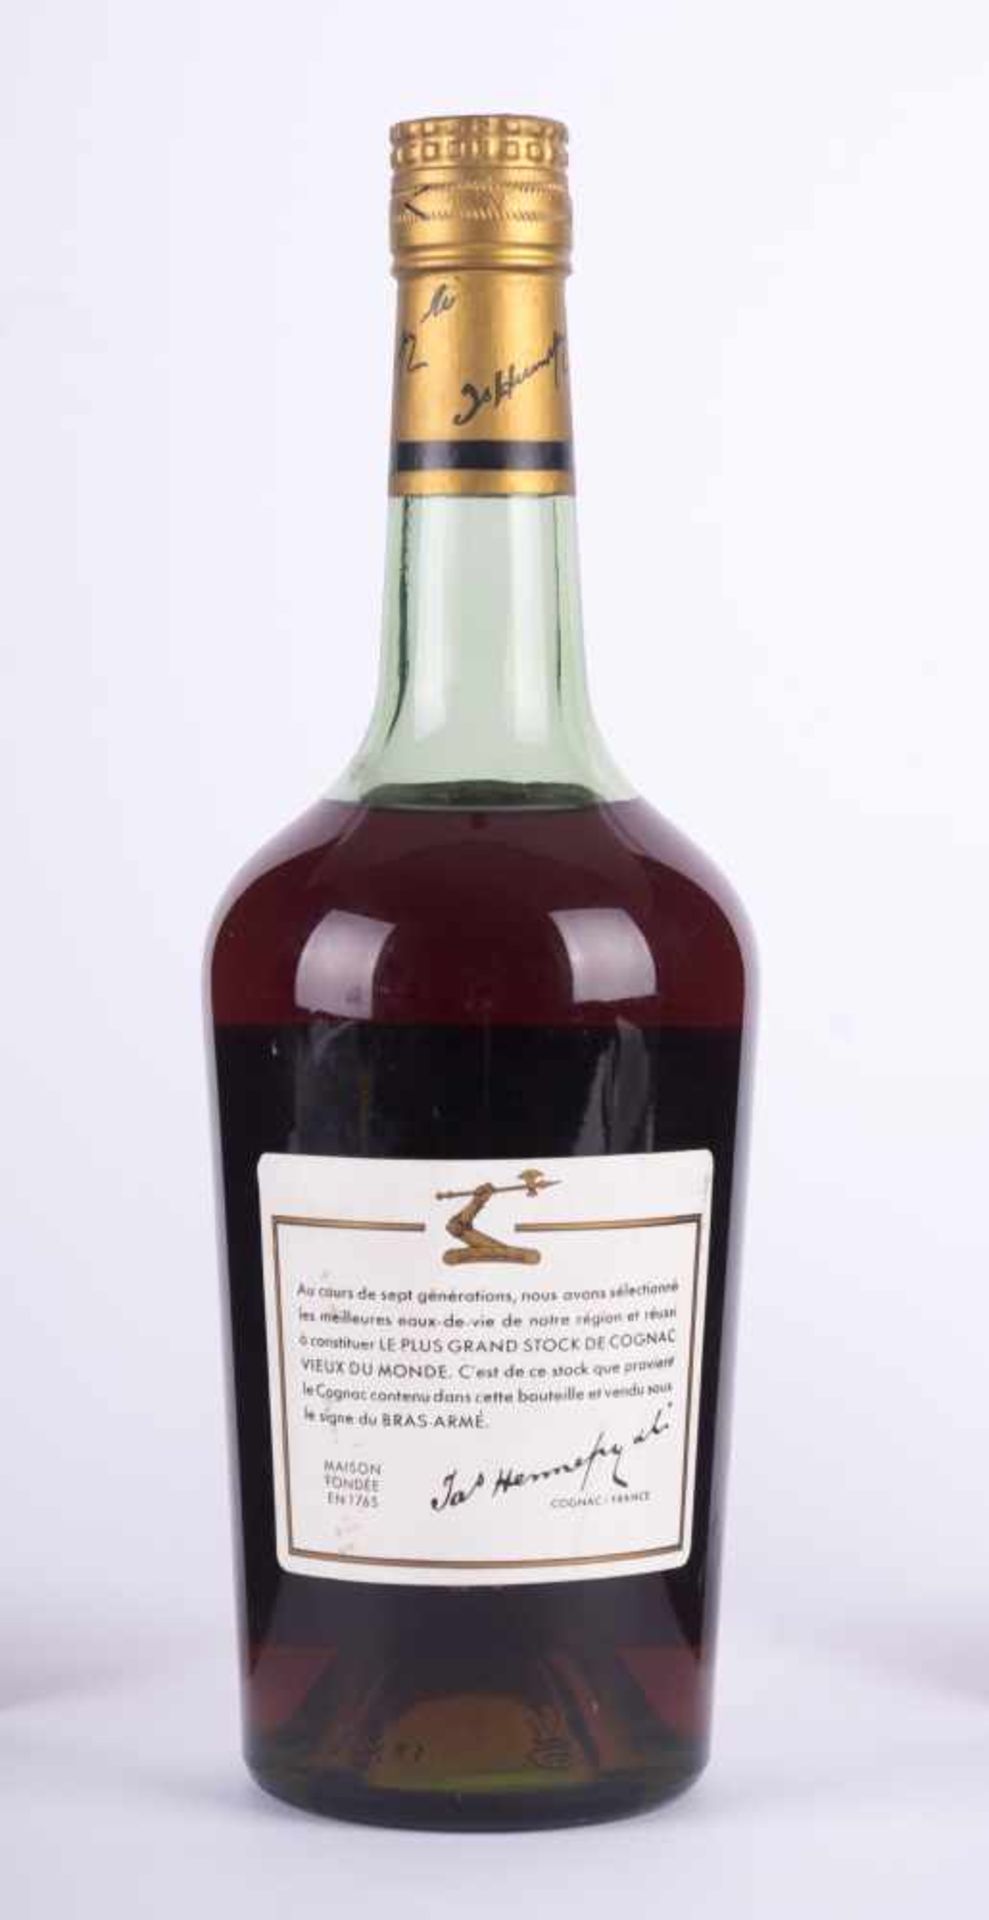 Hennessy Cognac Franreich 1960 Füllstand normal, Etikett guter Zustand, 0,7 l Hennessy Cognac France - Image 3 of 4